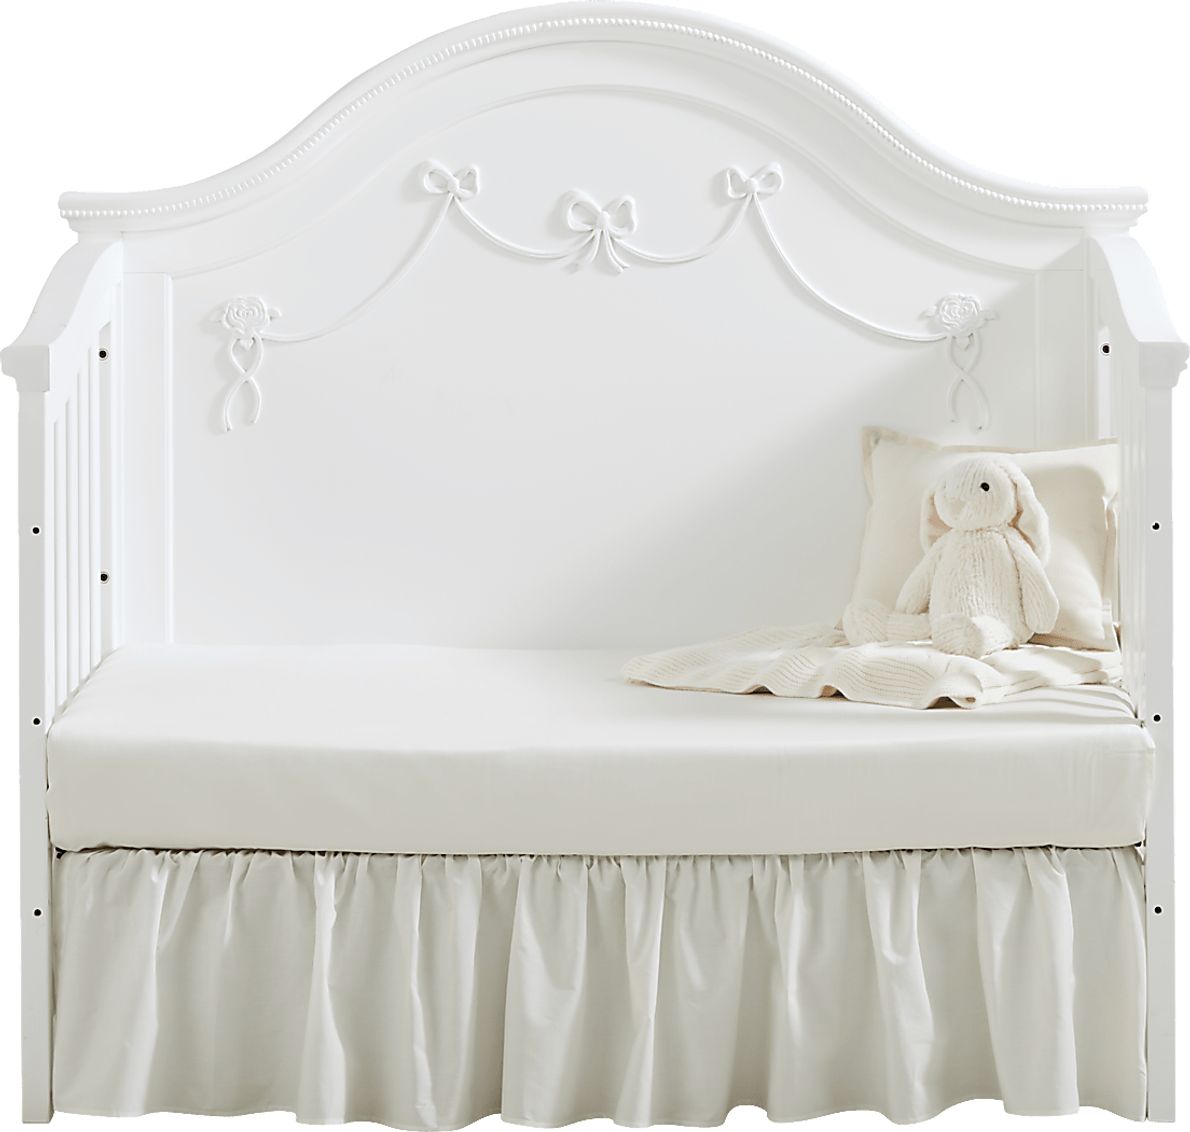 Disney Princess Fairytale White Convertible Crib